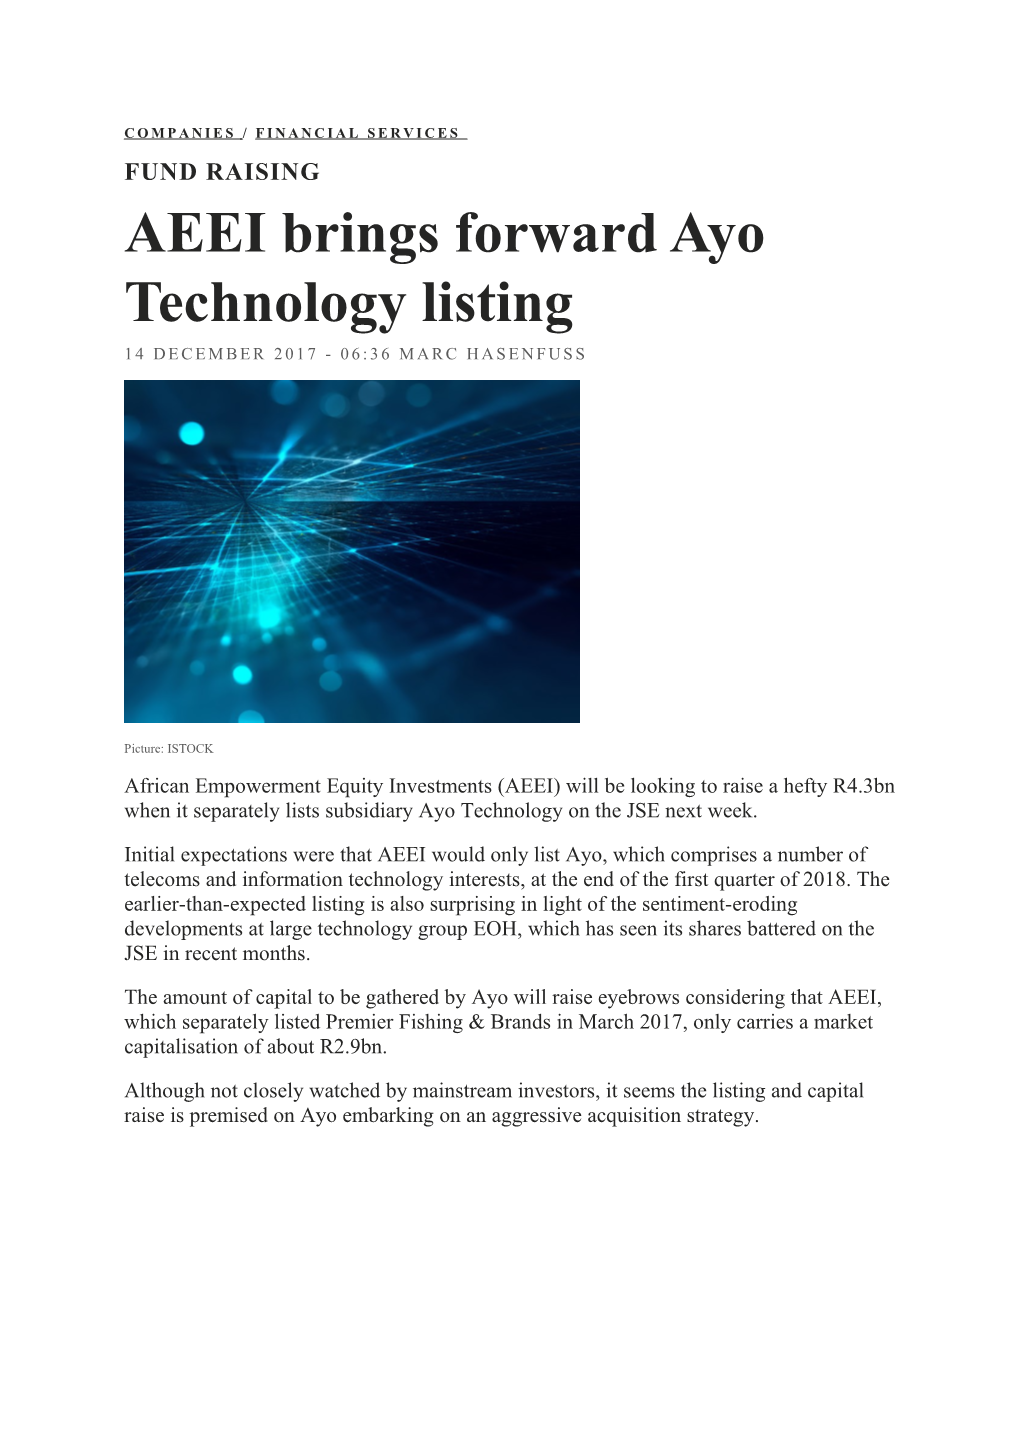 AEEI Brings Forward Ayo Technology Listing